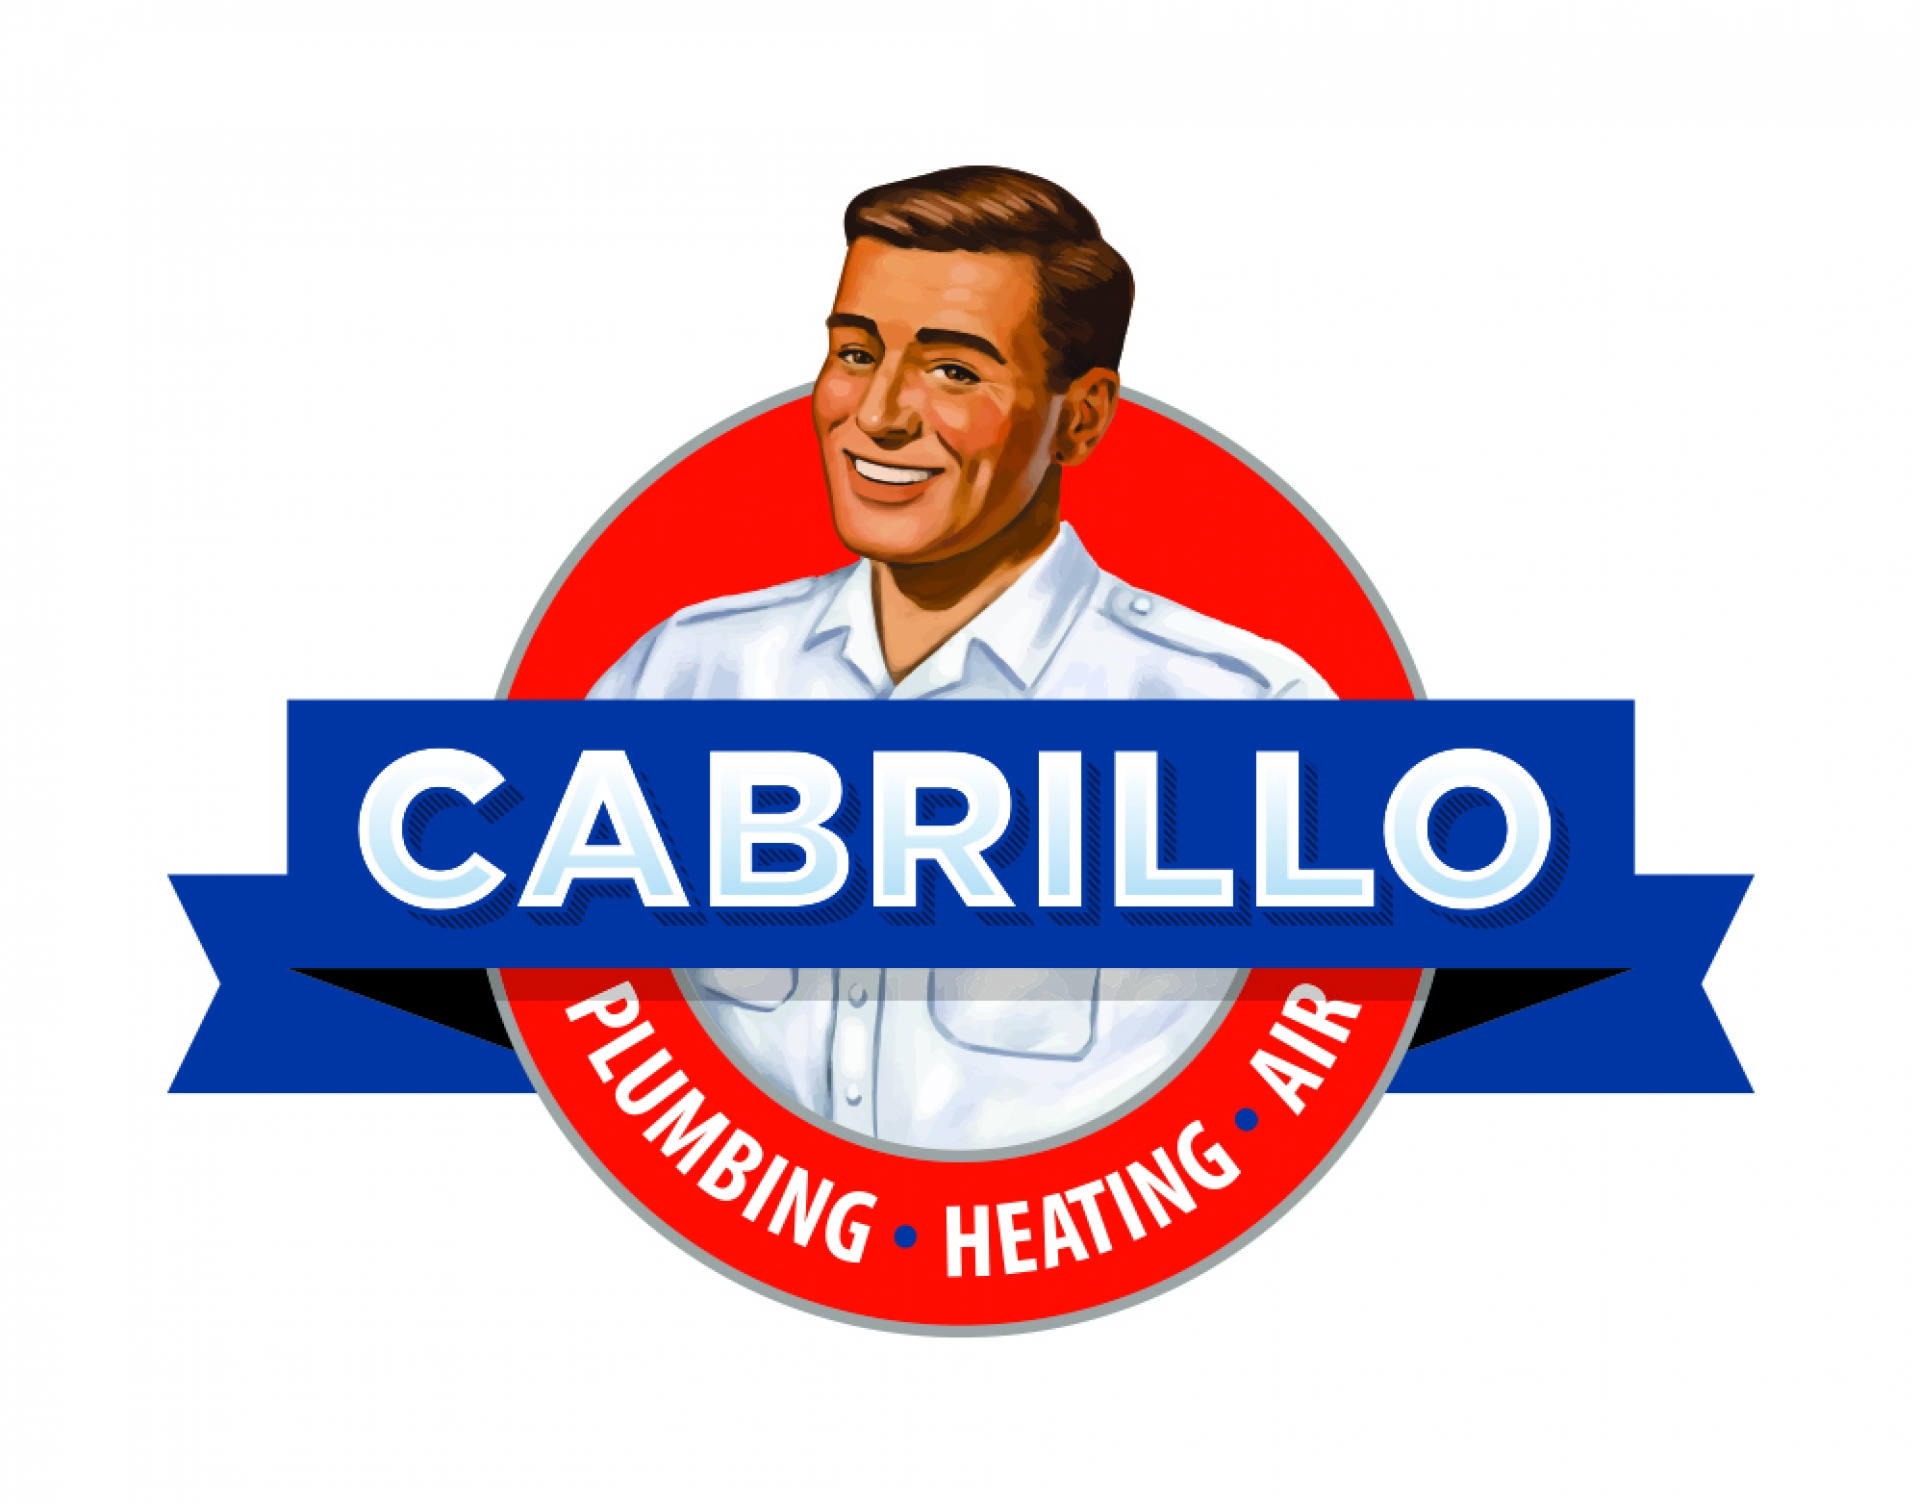 Cabrillo Plumbing & Heating company logo